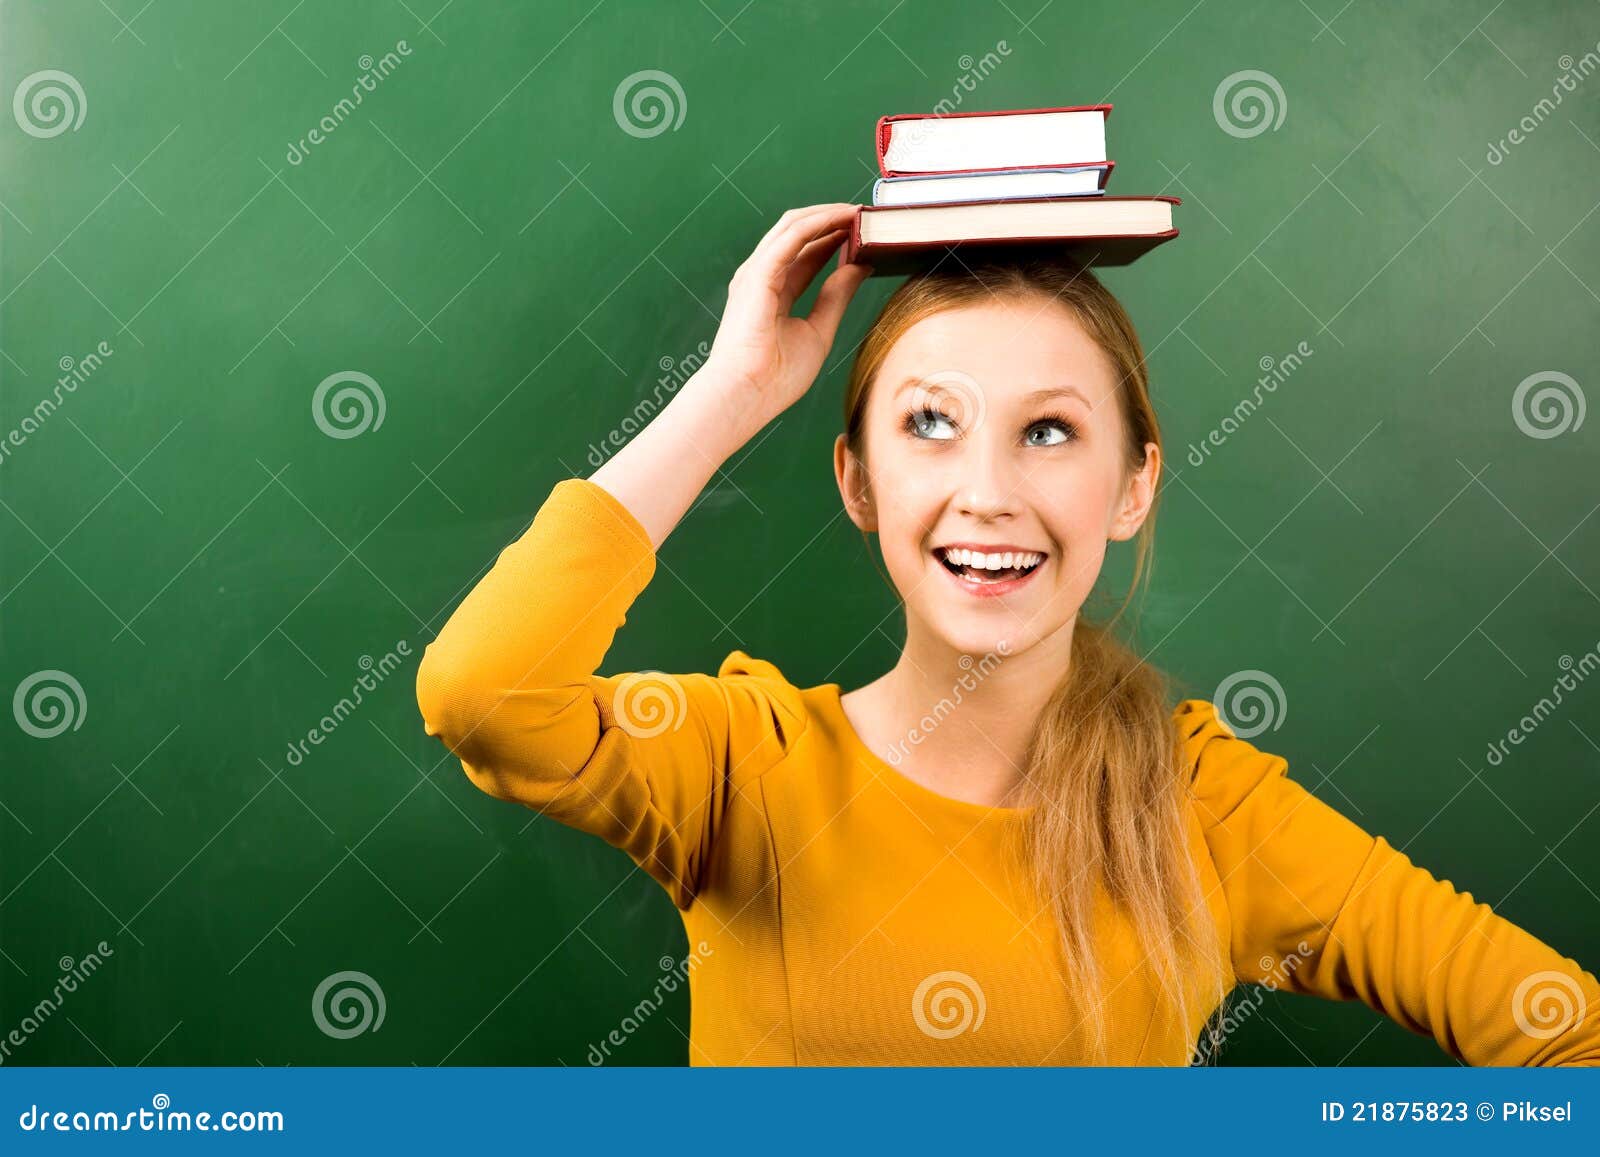 woman balancing books on head